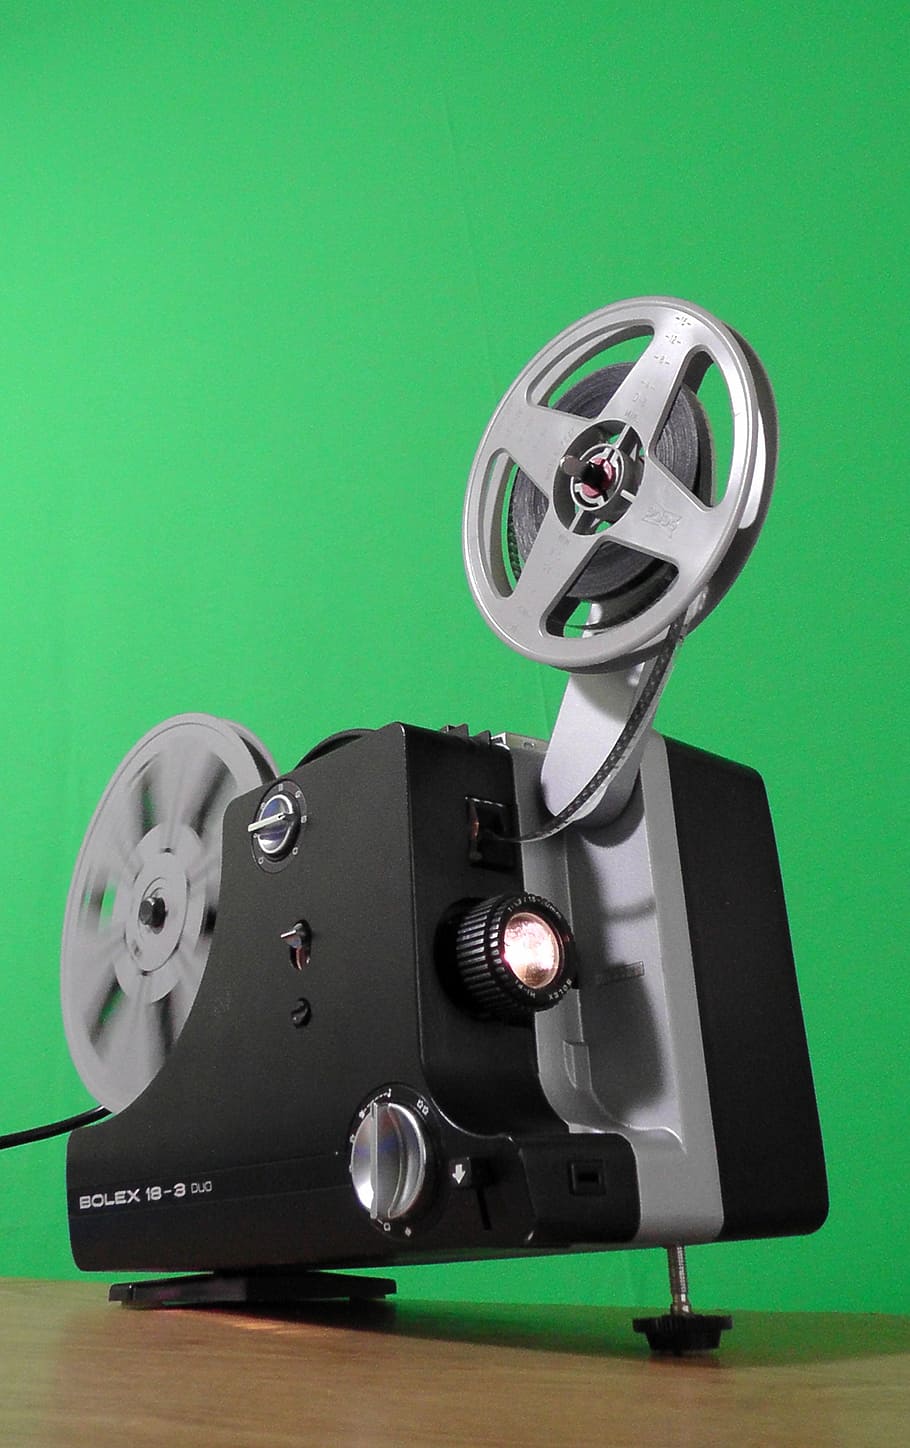 negro, gris, cámara de carrete, proyector, cine, bobina, película, proyección, colección de películas, películas caseras